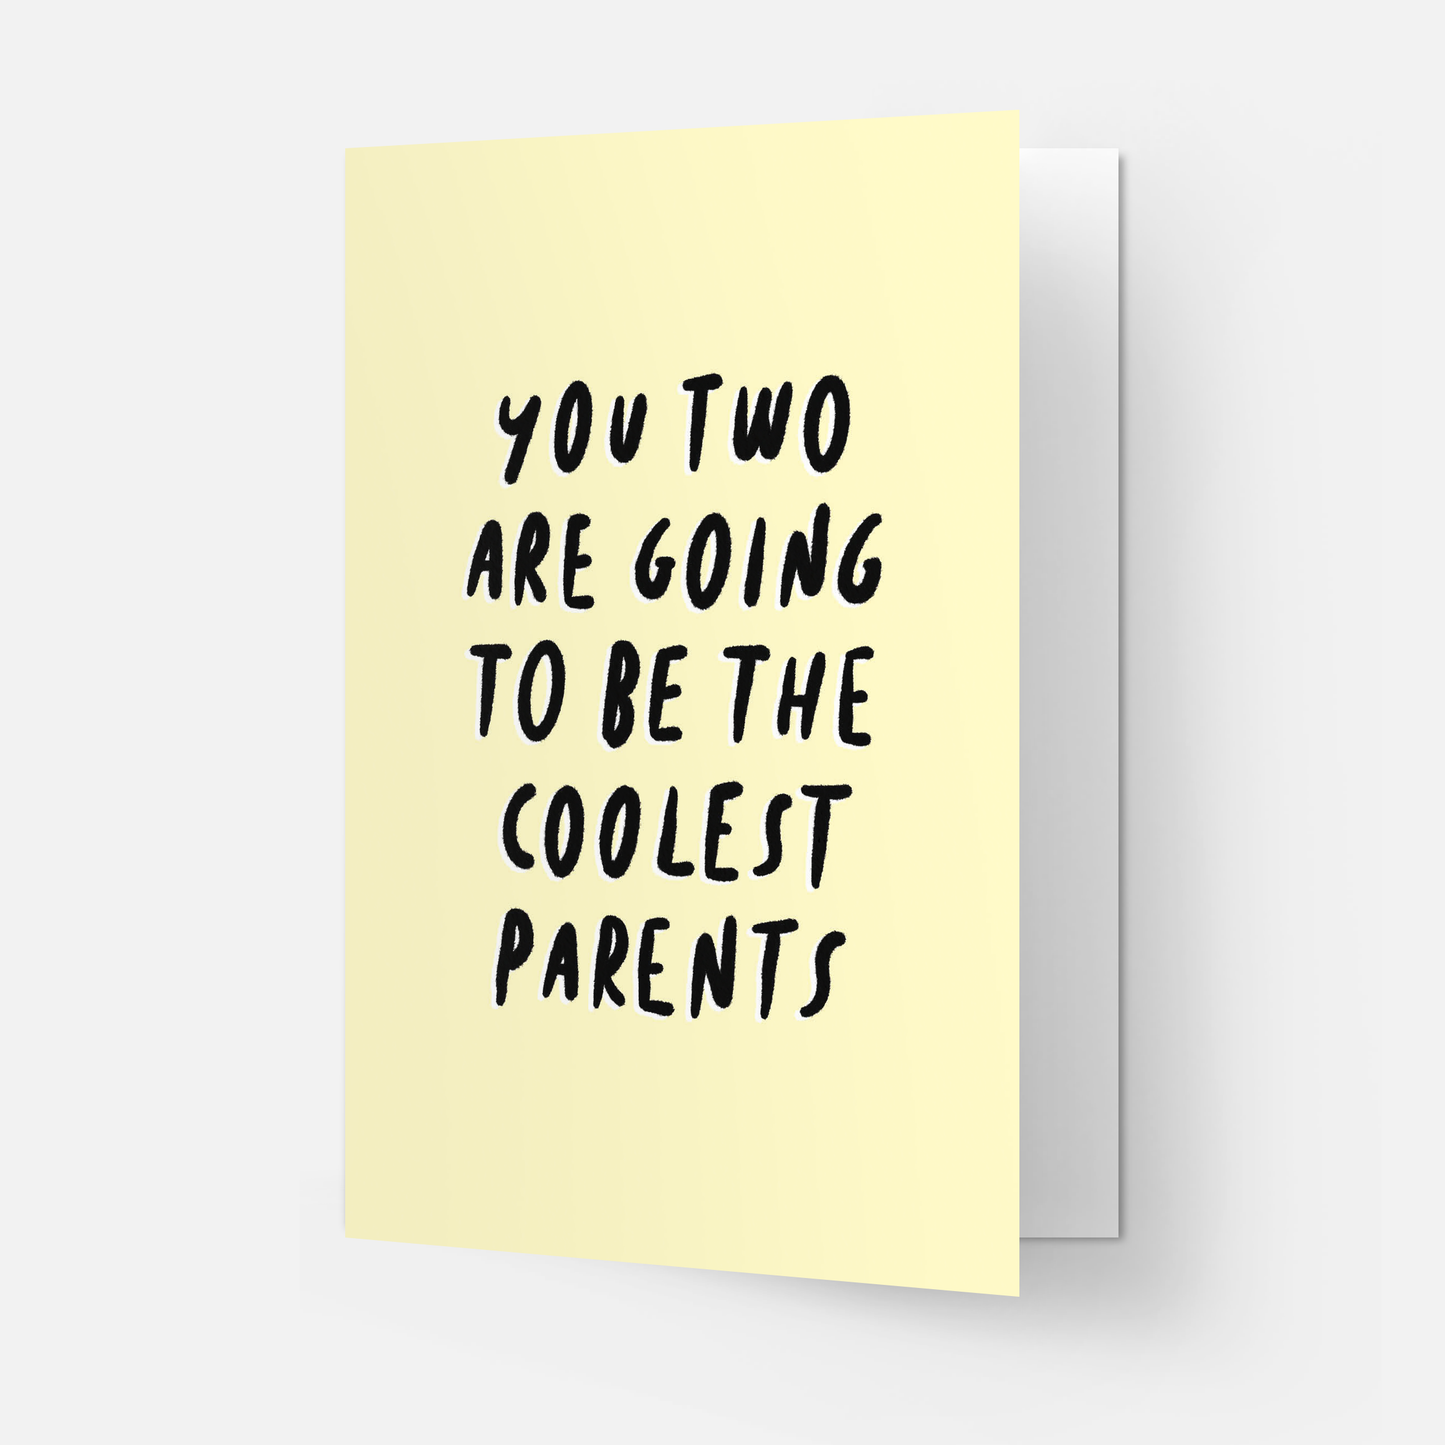 Coolest parents greeting card